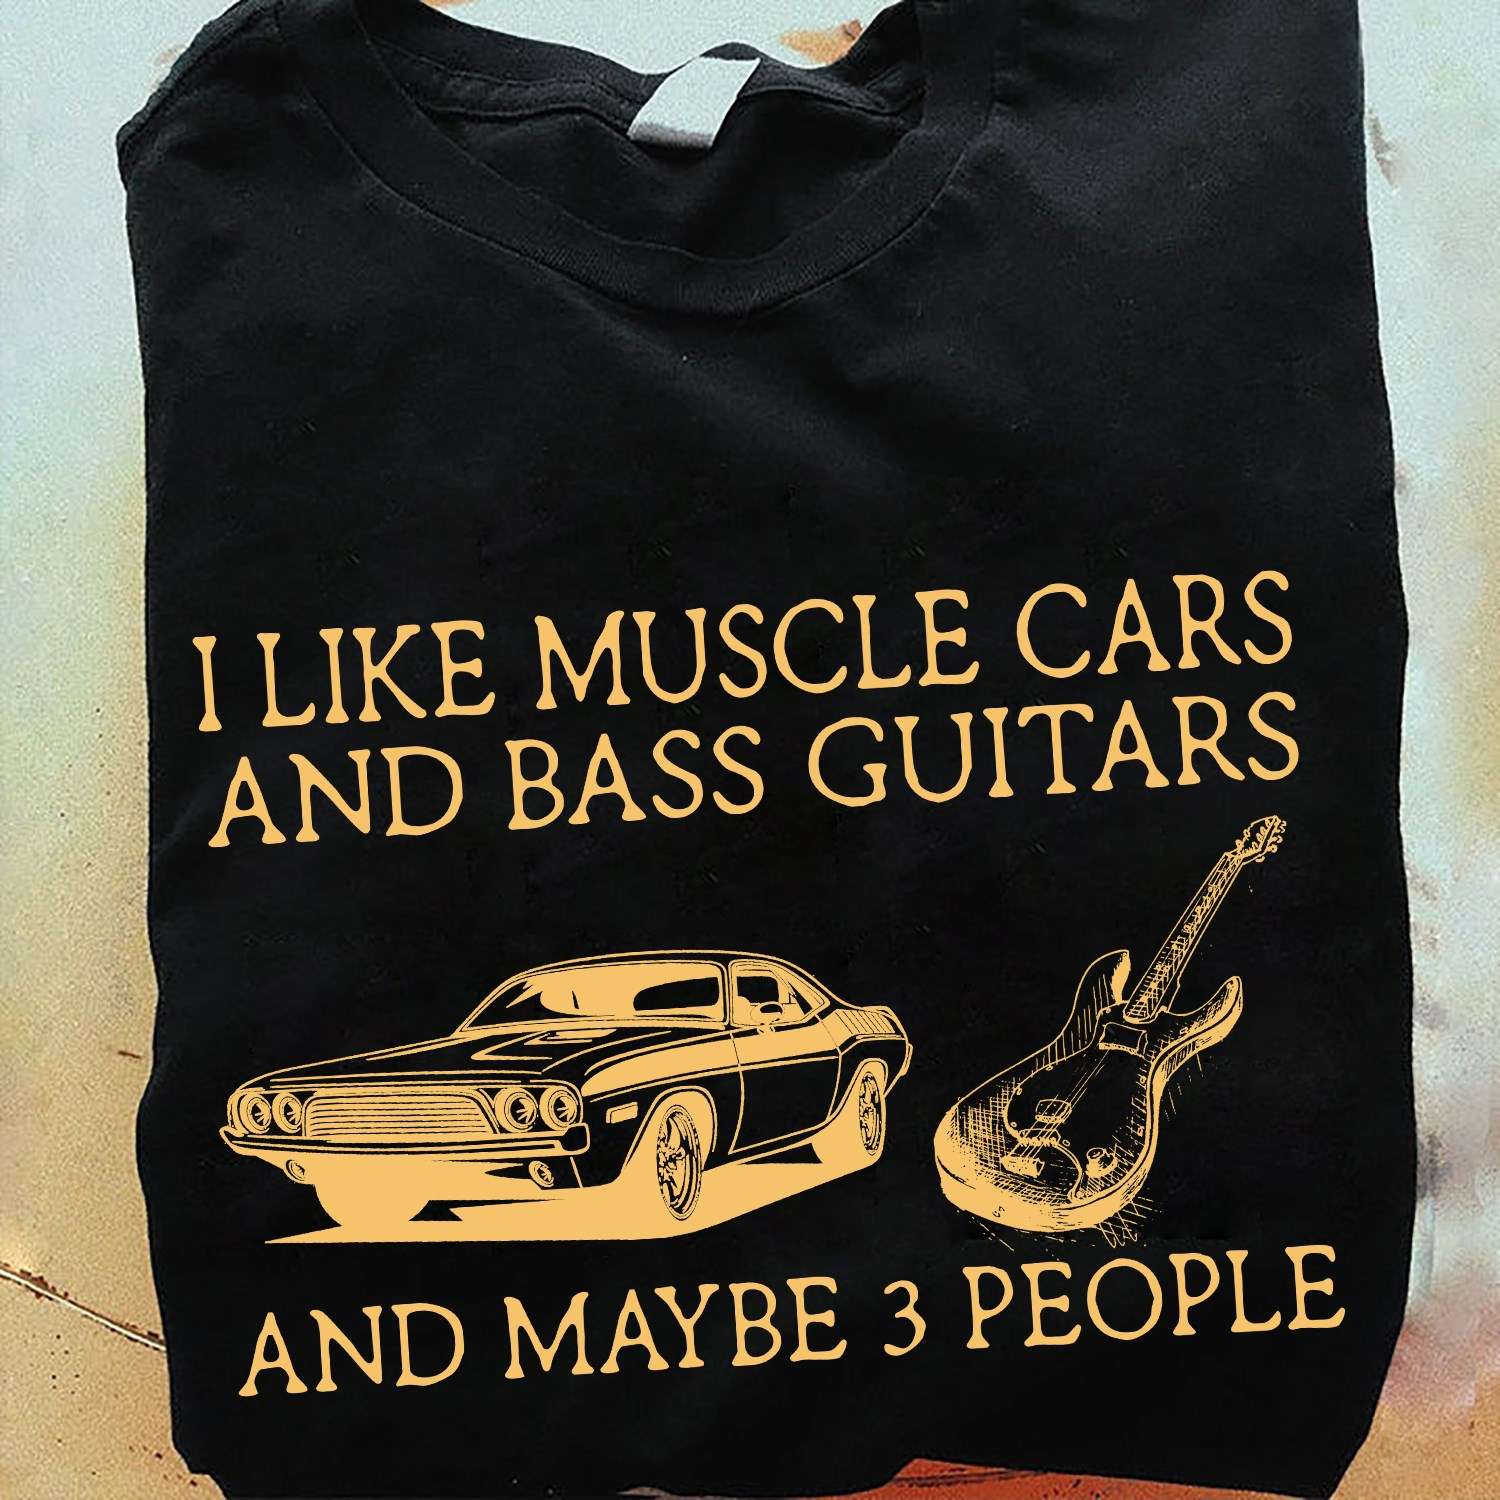 I like muscle cars and bass guitars - Drag car, bass guitars